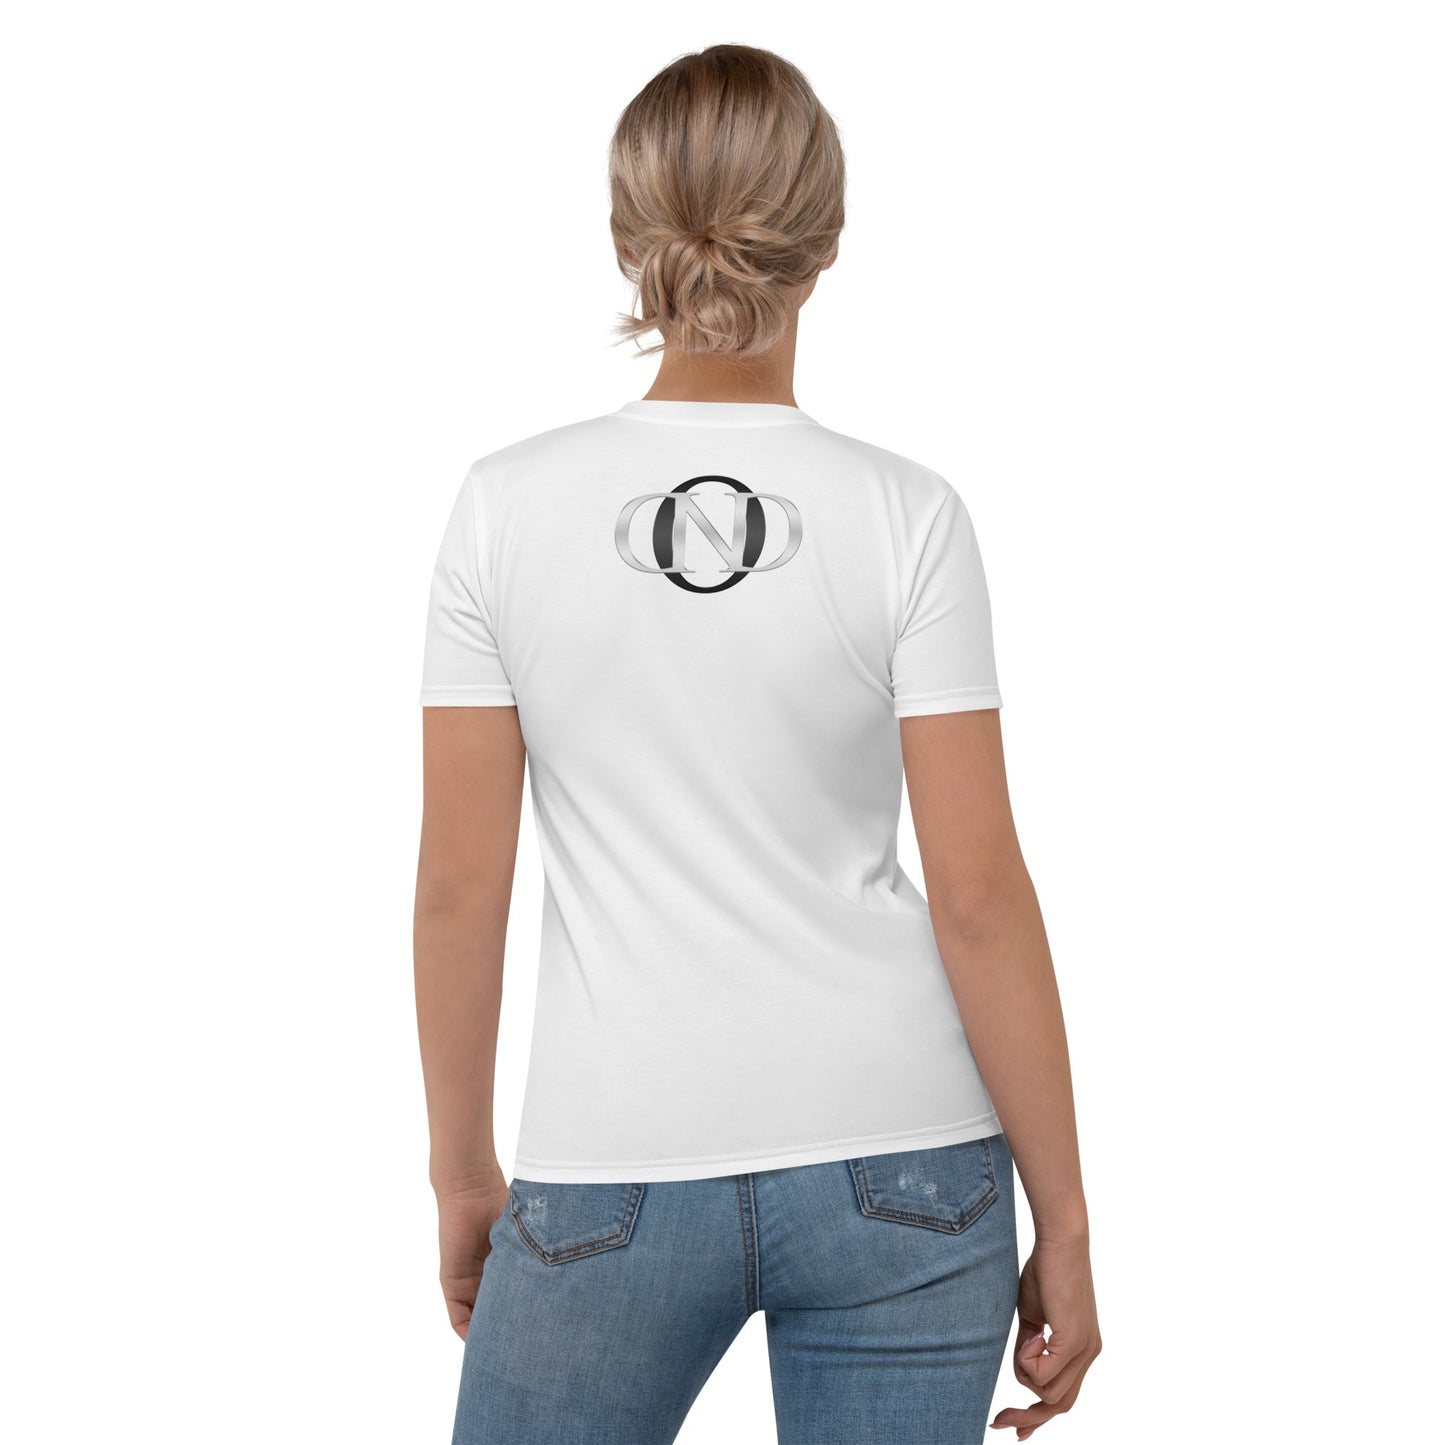 2 Neduz Designs Exposed Oasis Women’s T-shirt